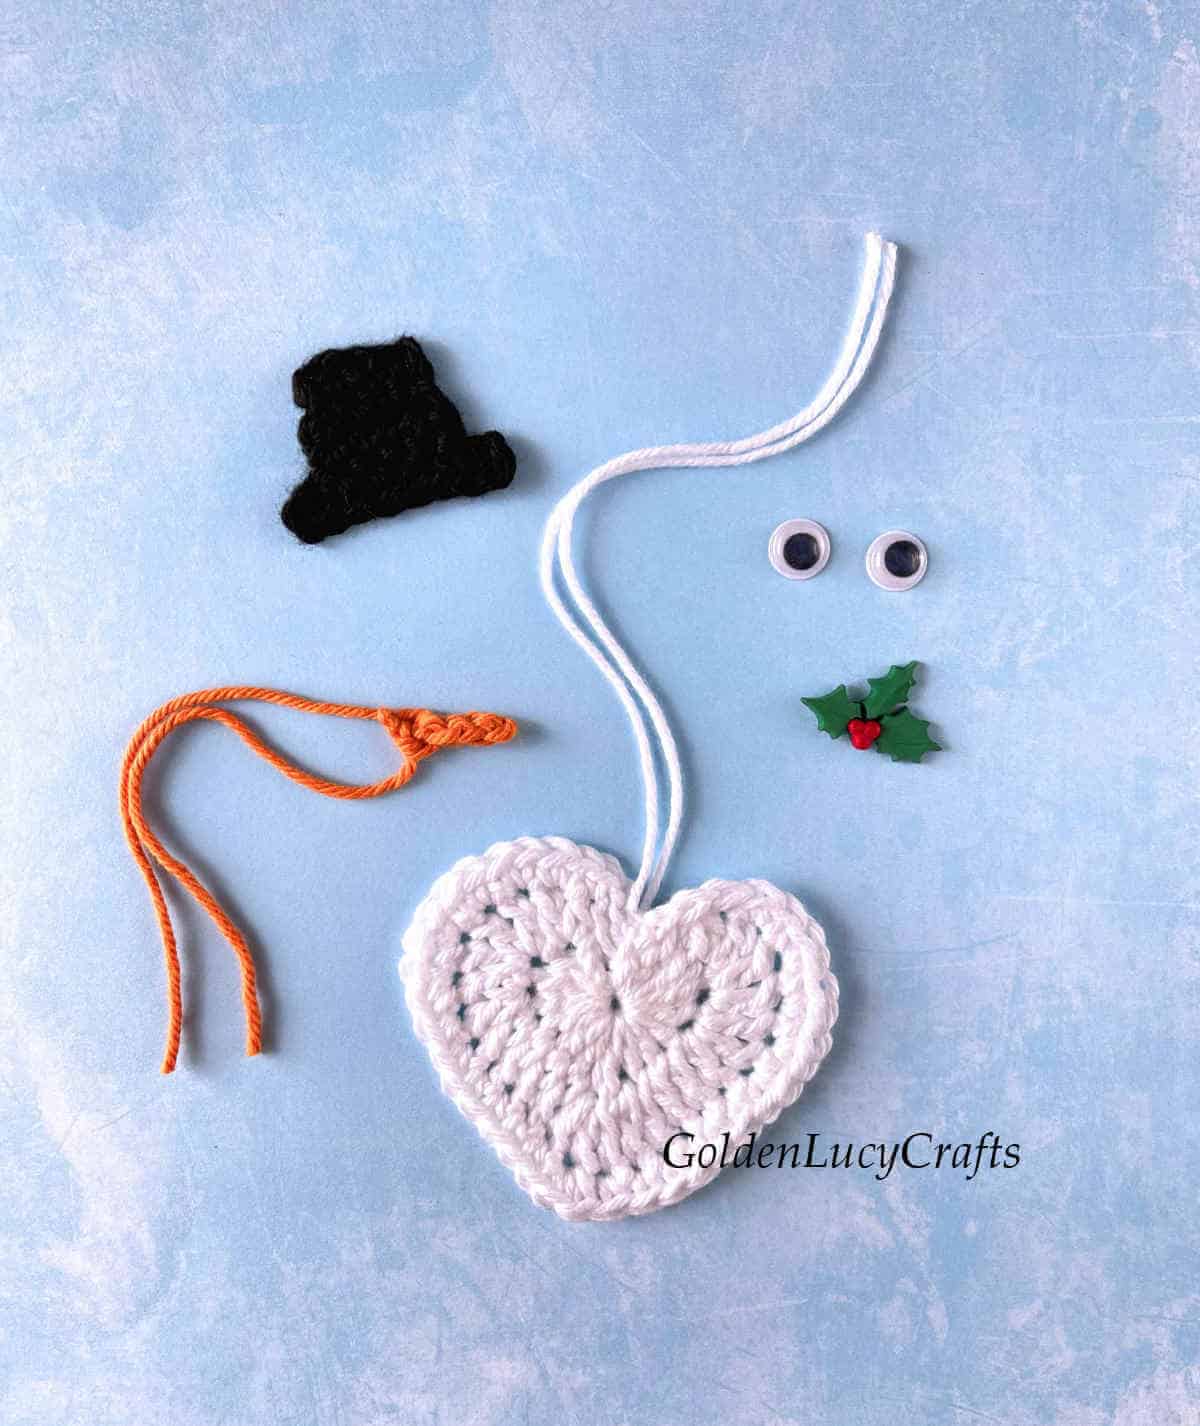 Parts of crochet heart snowman ornament.